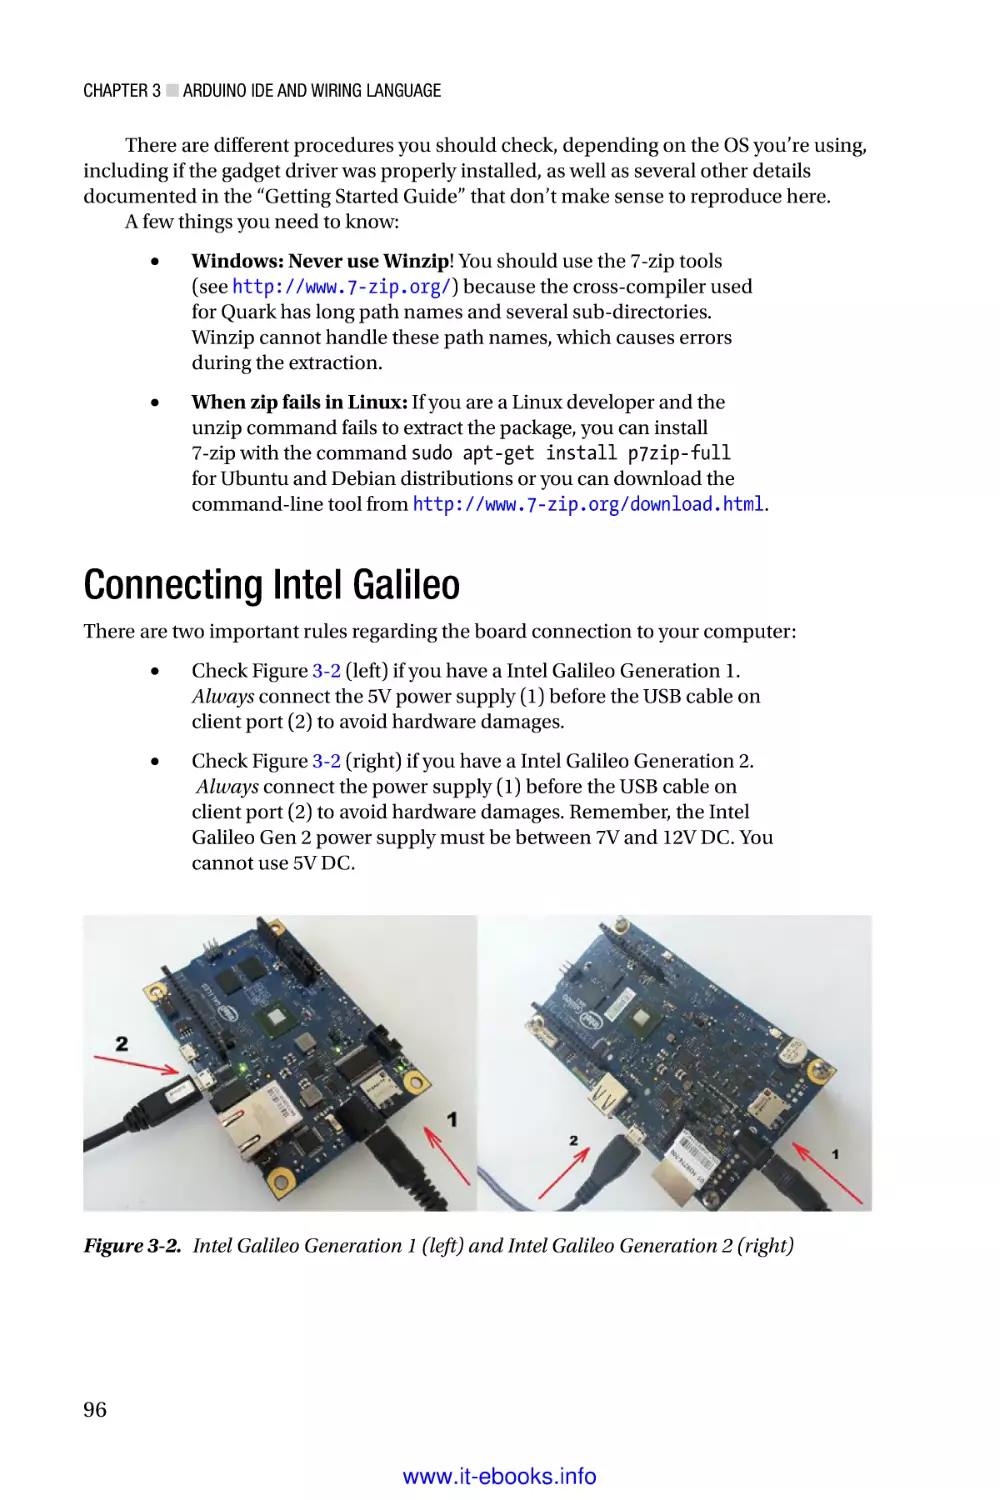 Connecting Intel Galileo